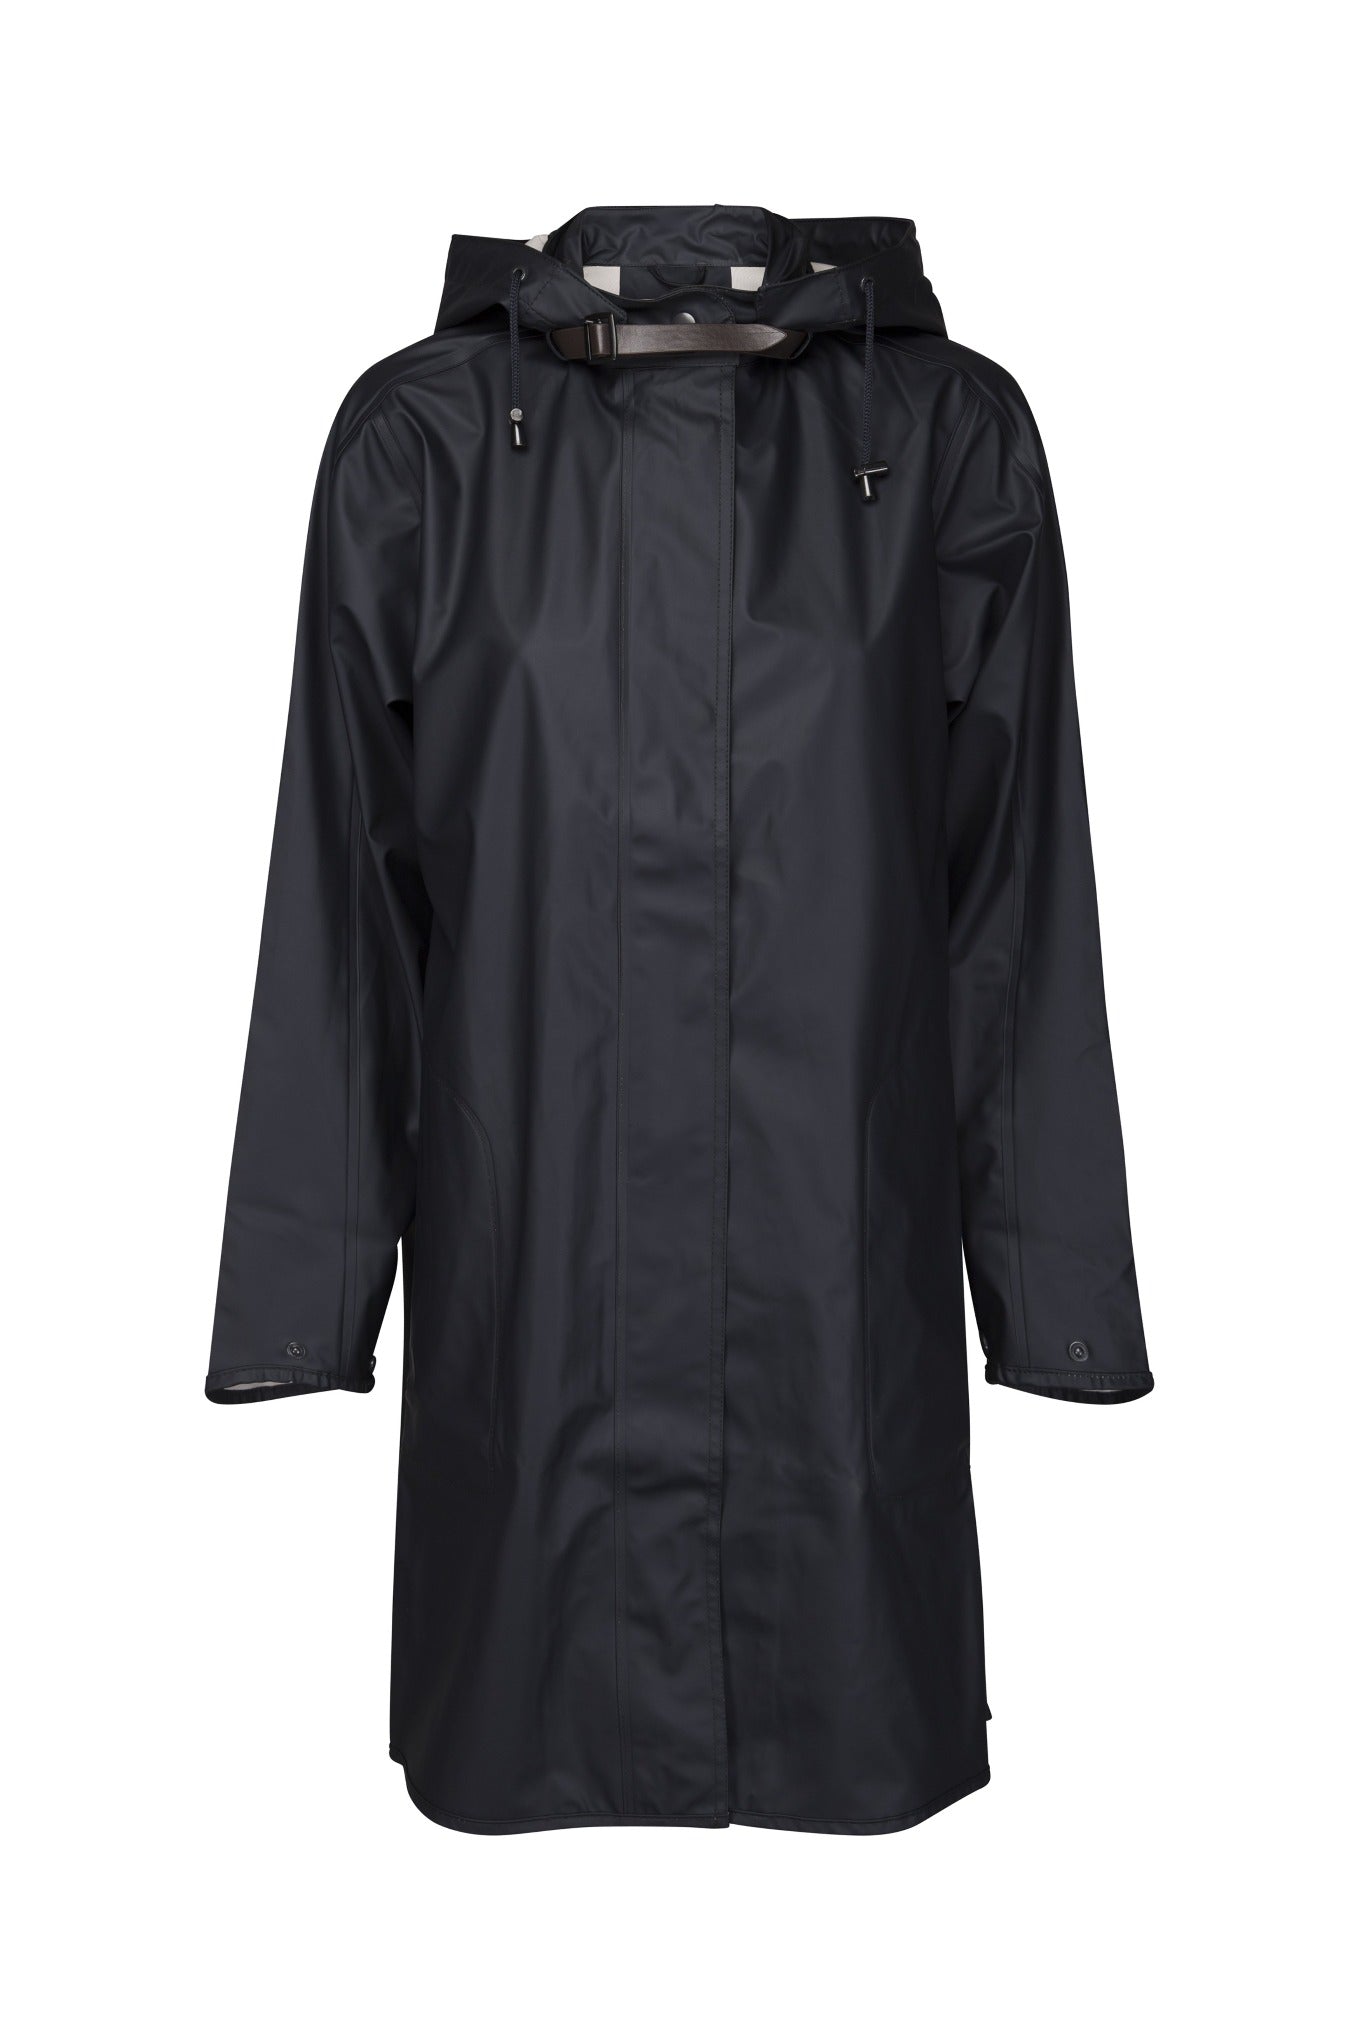 Ilse Jacobsen Rain71 Rain 71 long slightly A-line raincoat with detachable hood, in Dark indigo navy.